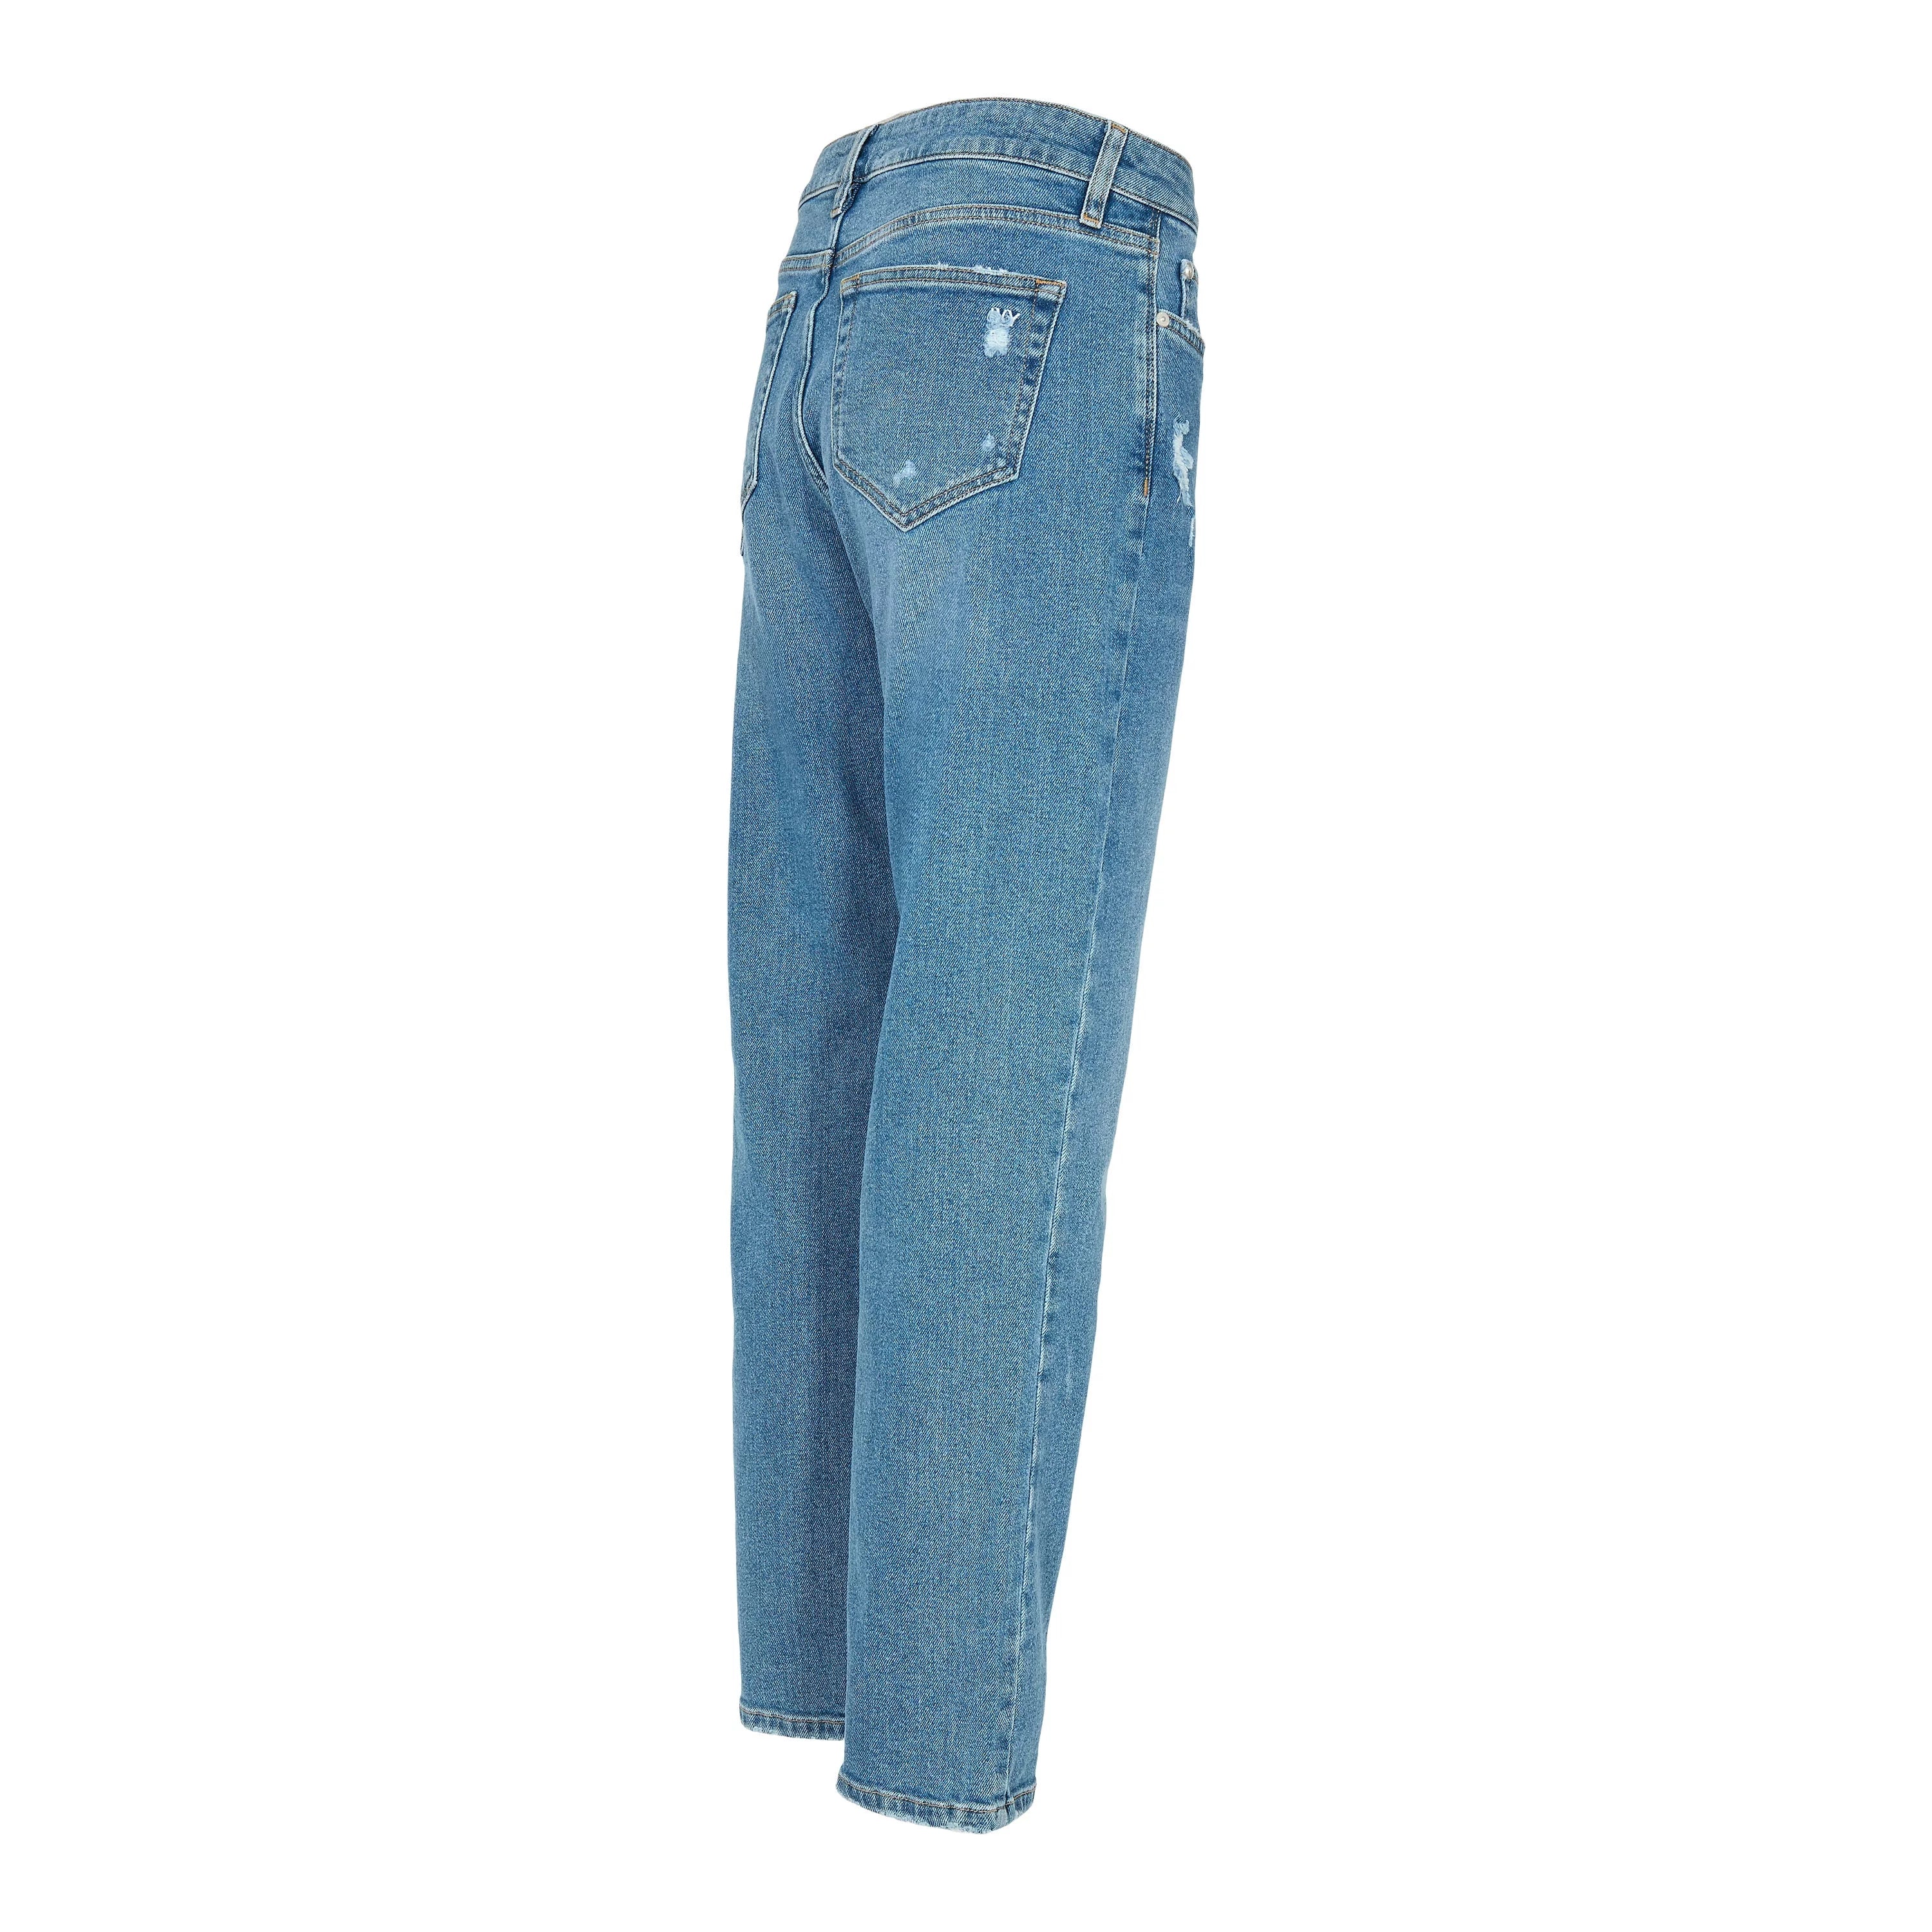 Ivy - Tonya Earth Jeans Wash, Mid Blue Alaska by Ivy | stylebykul